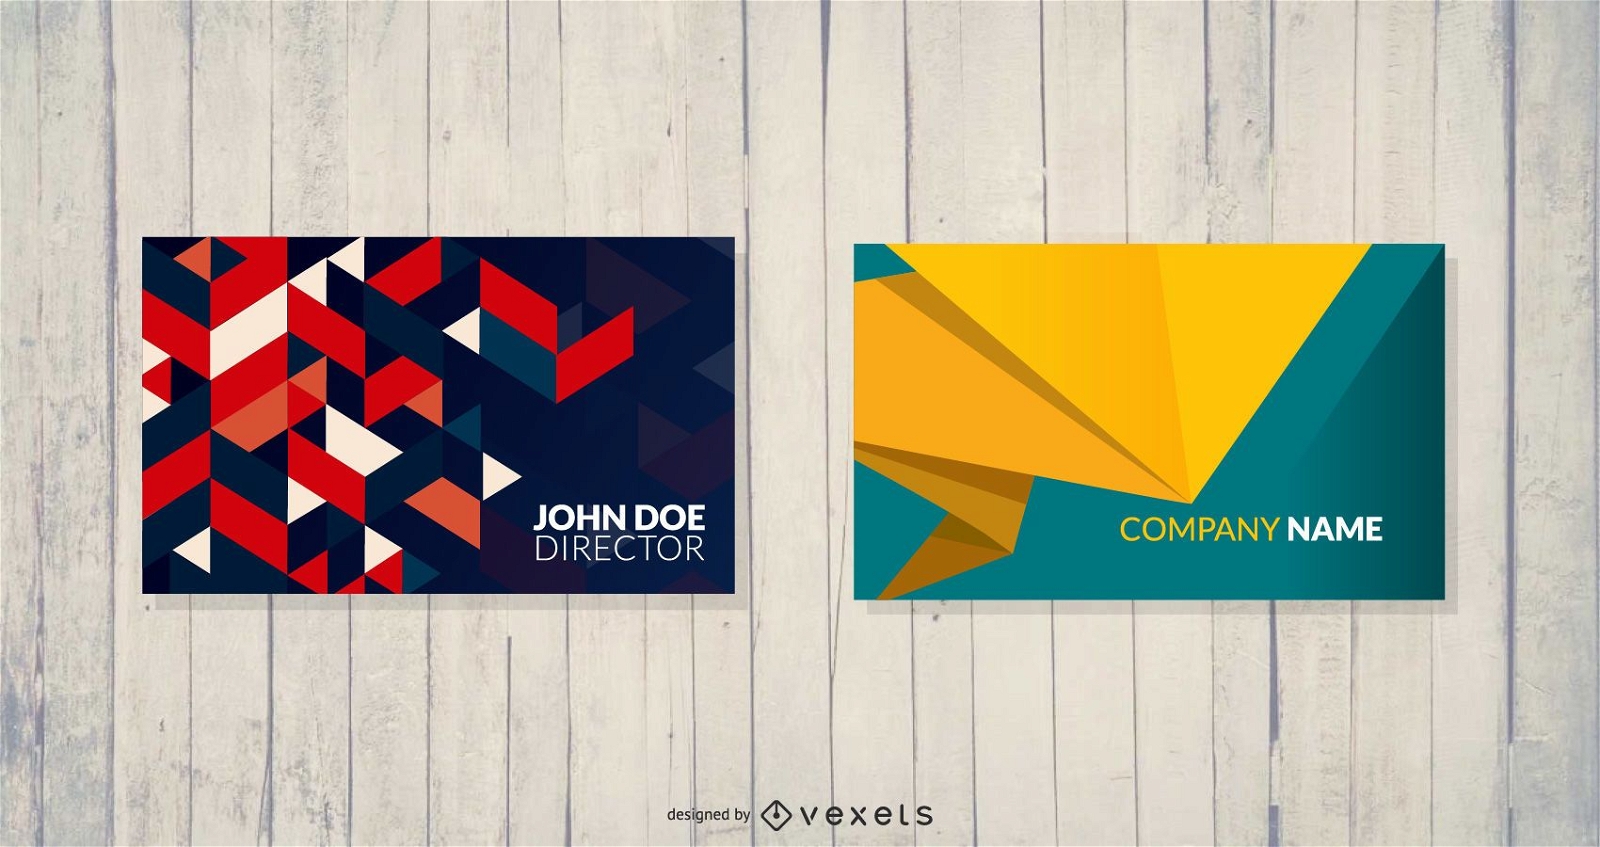 Geometric Business Card Templates